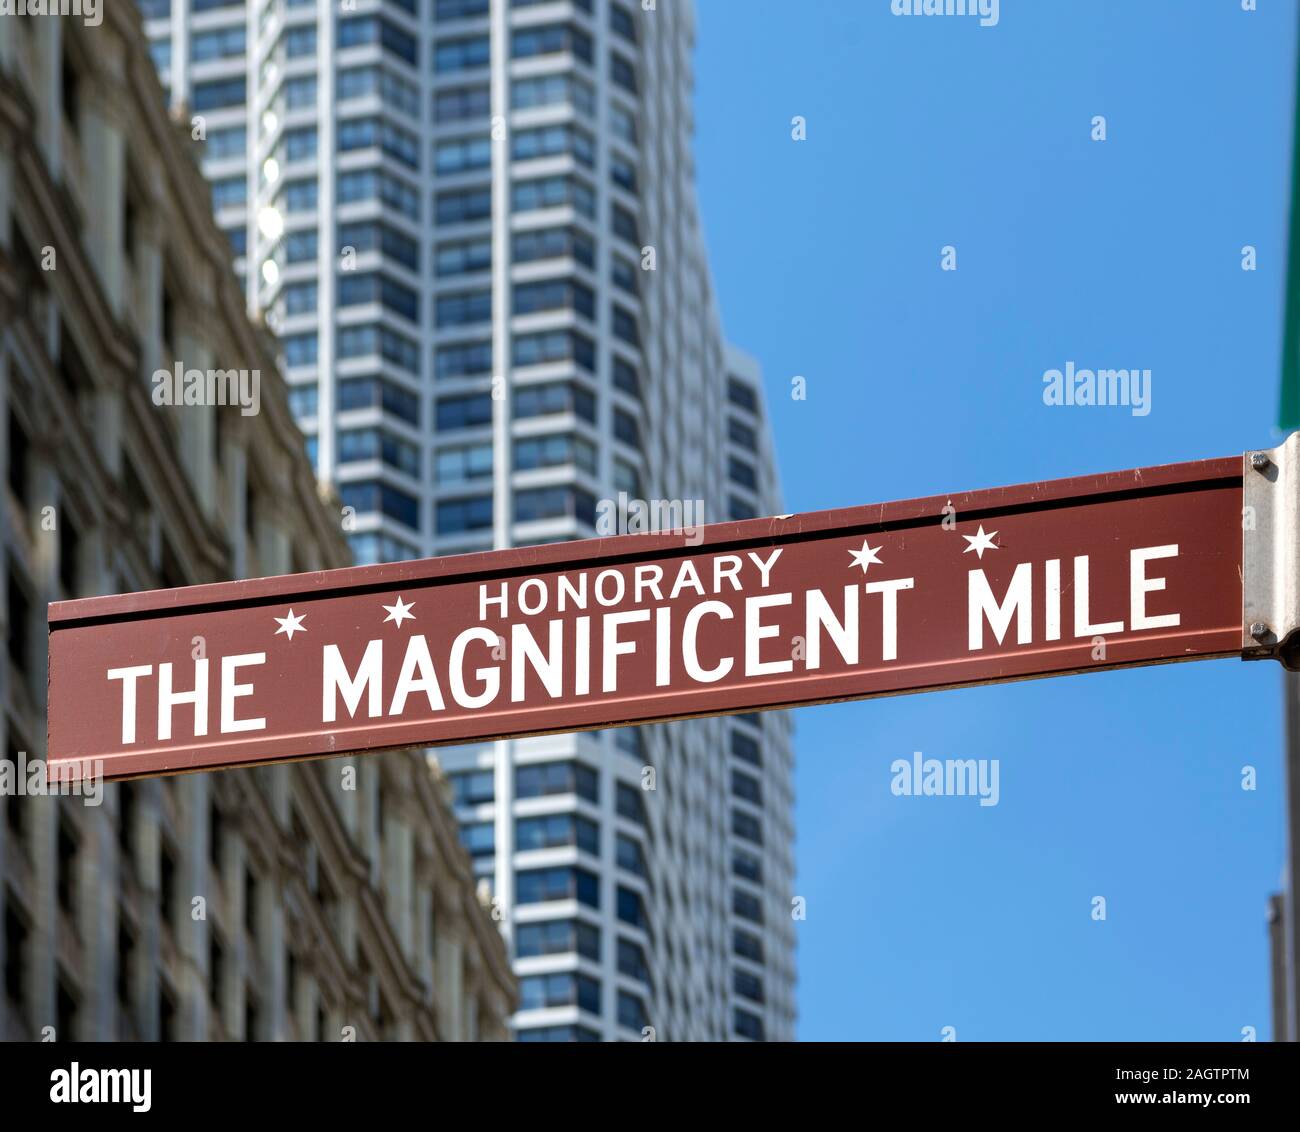 Magnificent Mile street sign, Michigan Avenue, Chicago, Illinois, USA Stock Photo